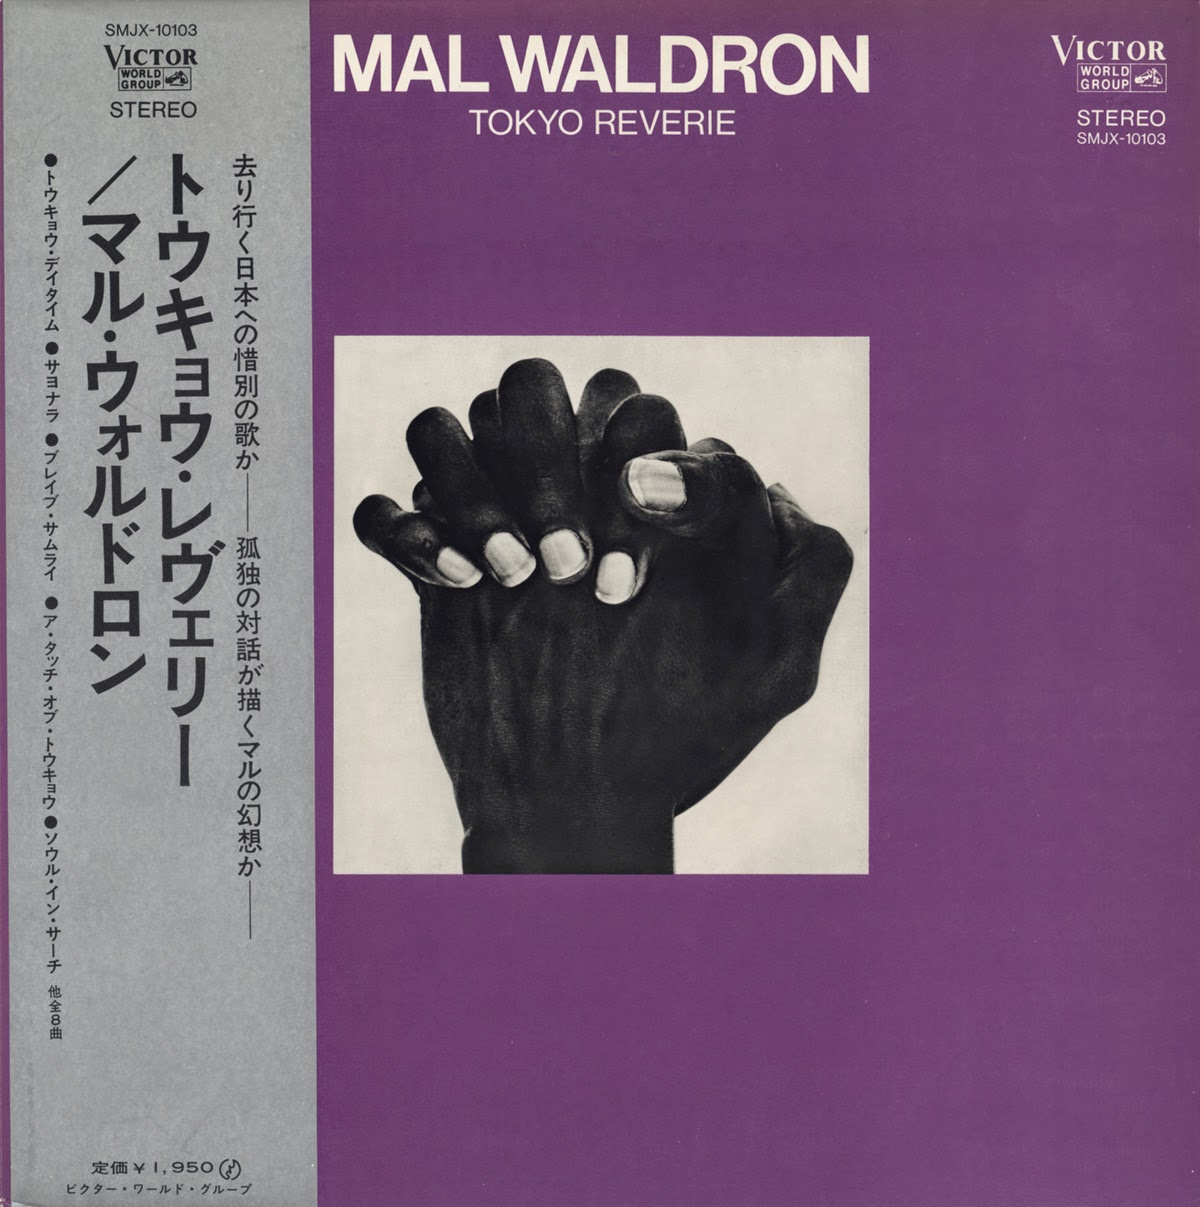 MAL WALDRON - Tokyo Reverie cover 